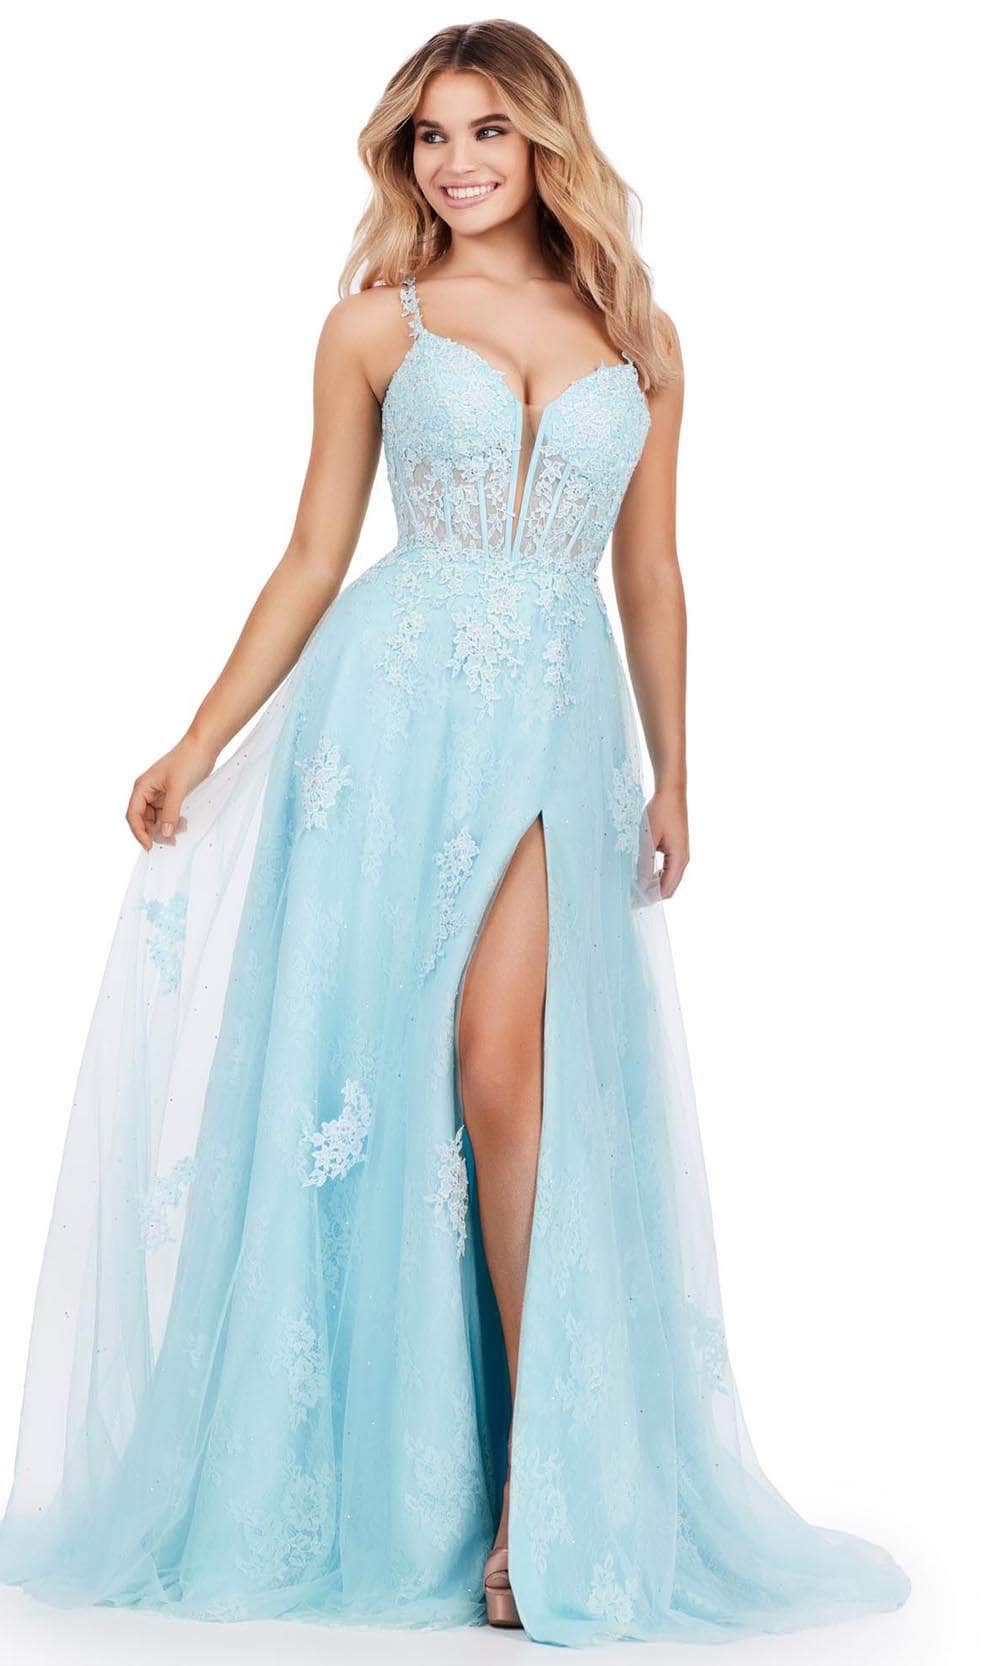 Ashley Lauren 11558 - Sweetheart Applique Prom Dress 00 /  Sky